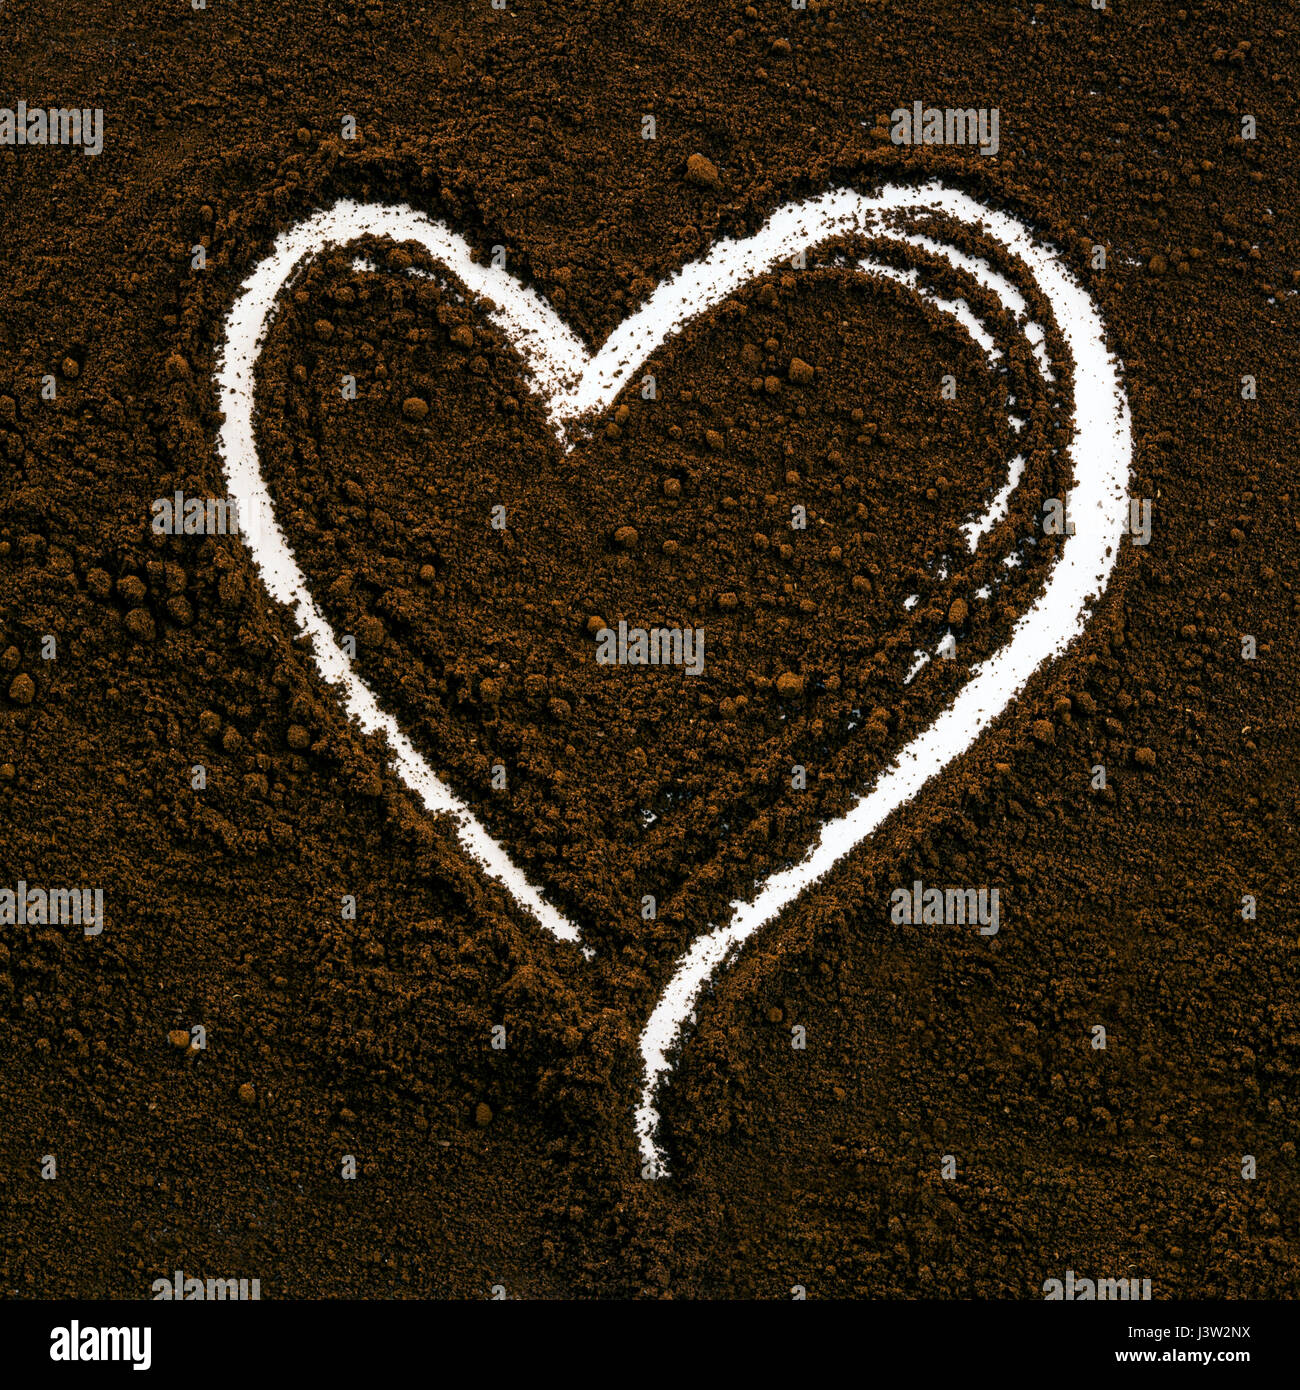 Coffee heart drawing Stock Photo